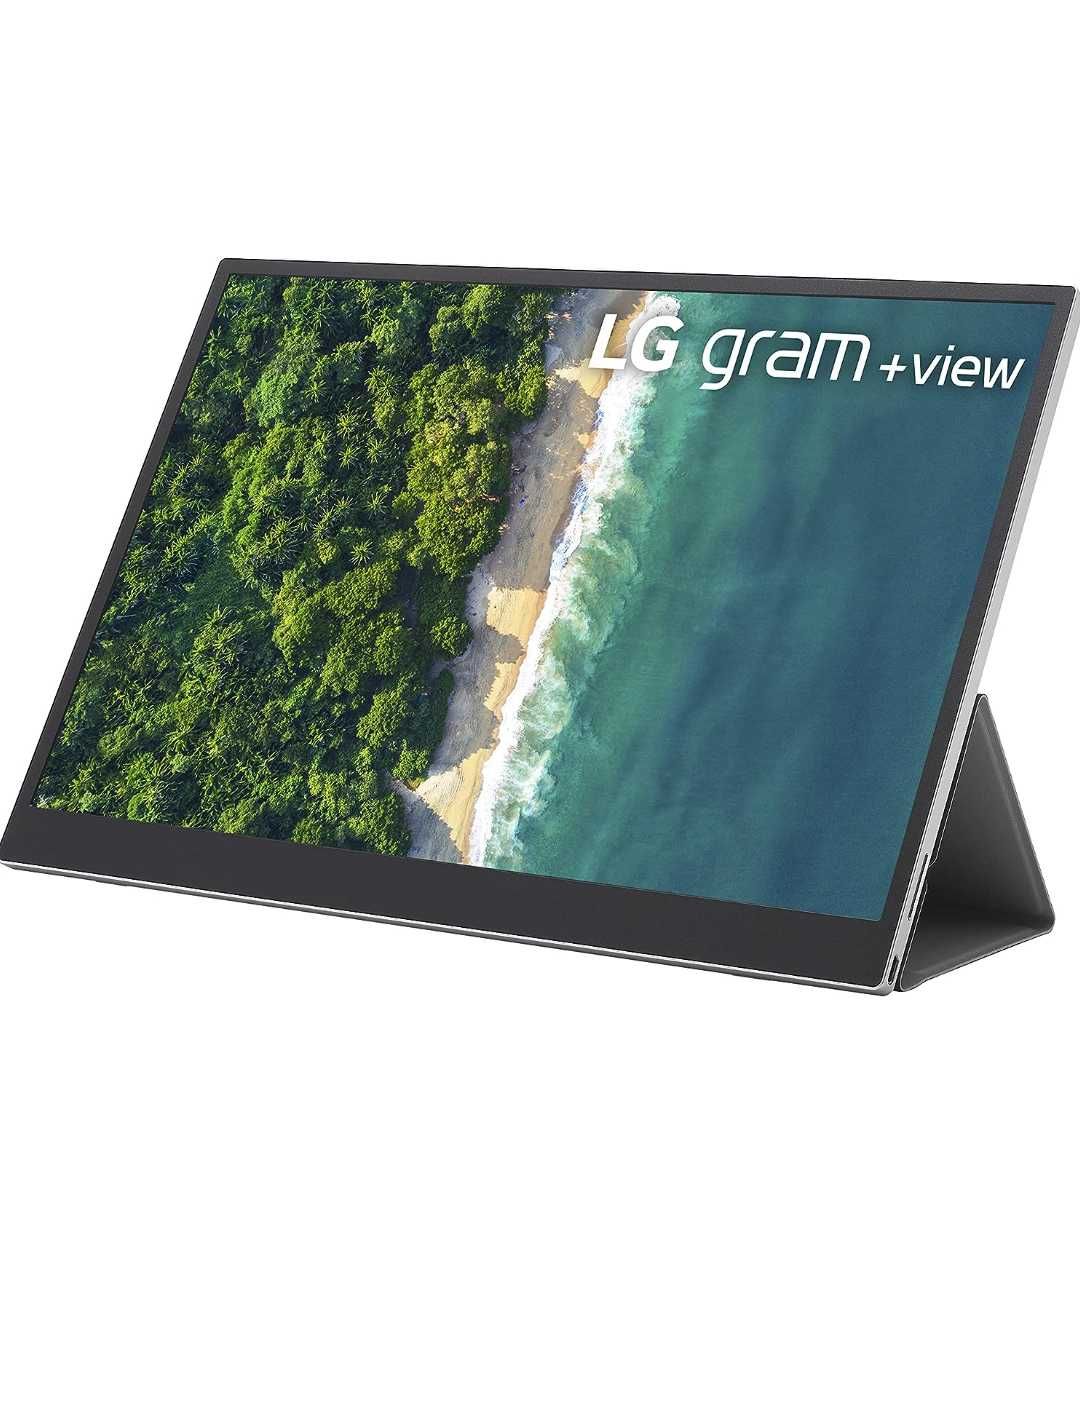 Monitor LG Gram +View 16